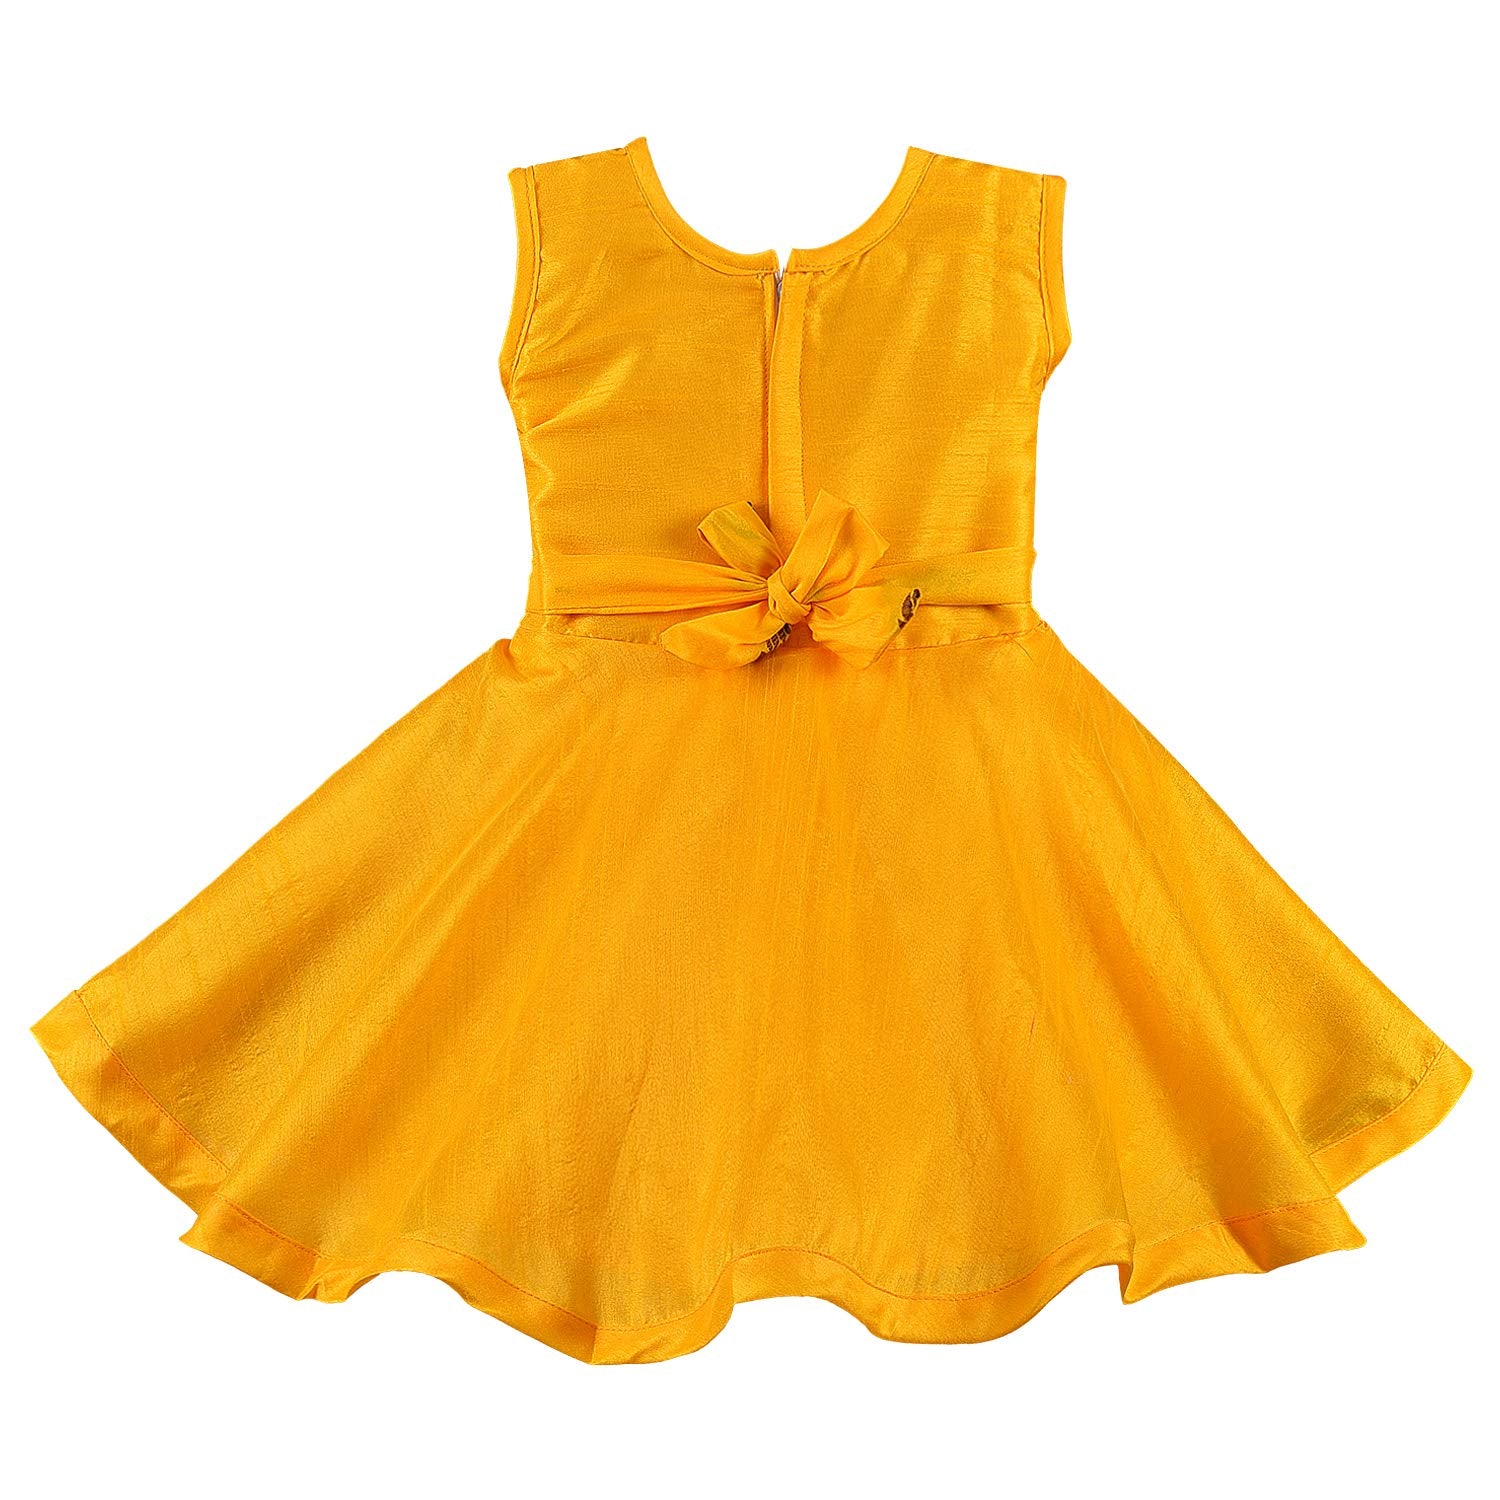 Baby Girls Frock Dress-fe2737y - Wish Karo Party Wear - frocks Party Wear - baby dress